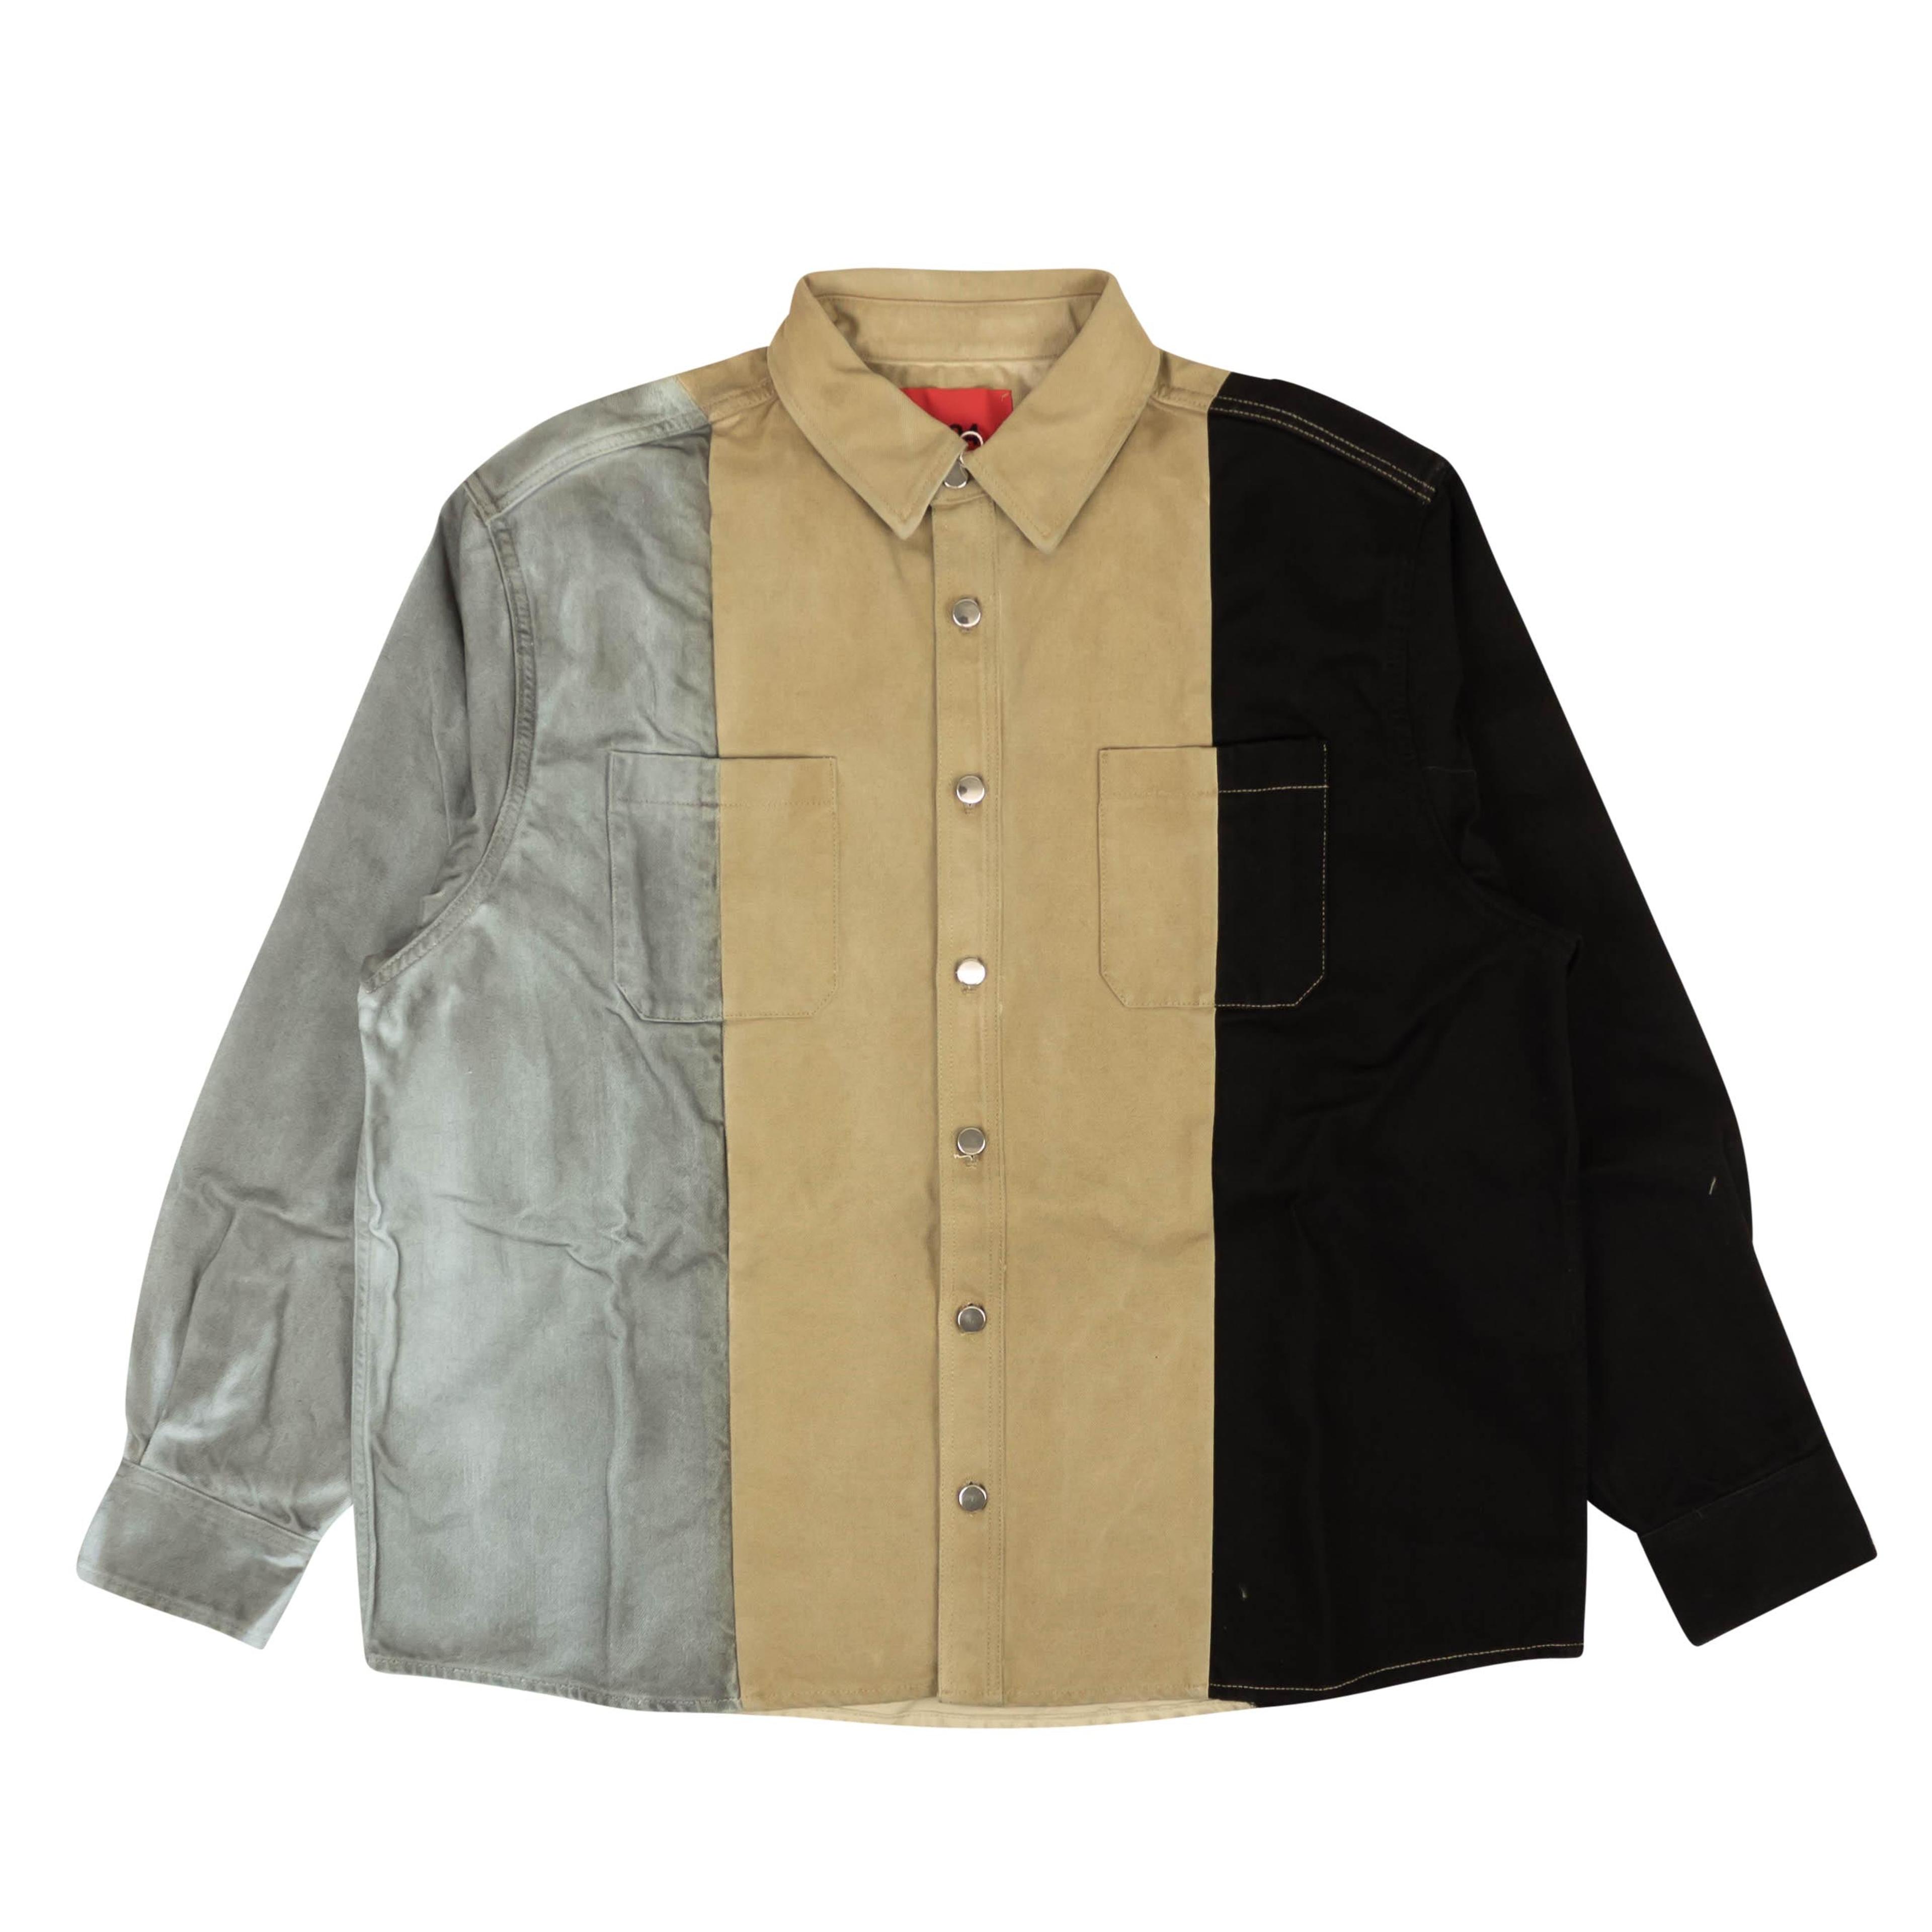 424 On Fairfax Oversized Colorblock Denim Shirt - Gray/Black/Bro